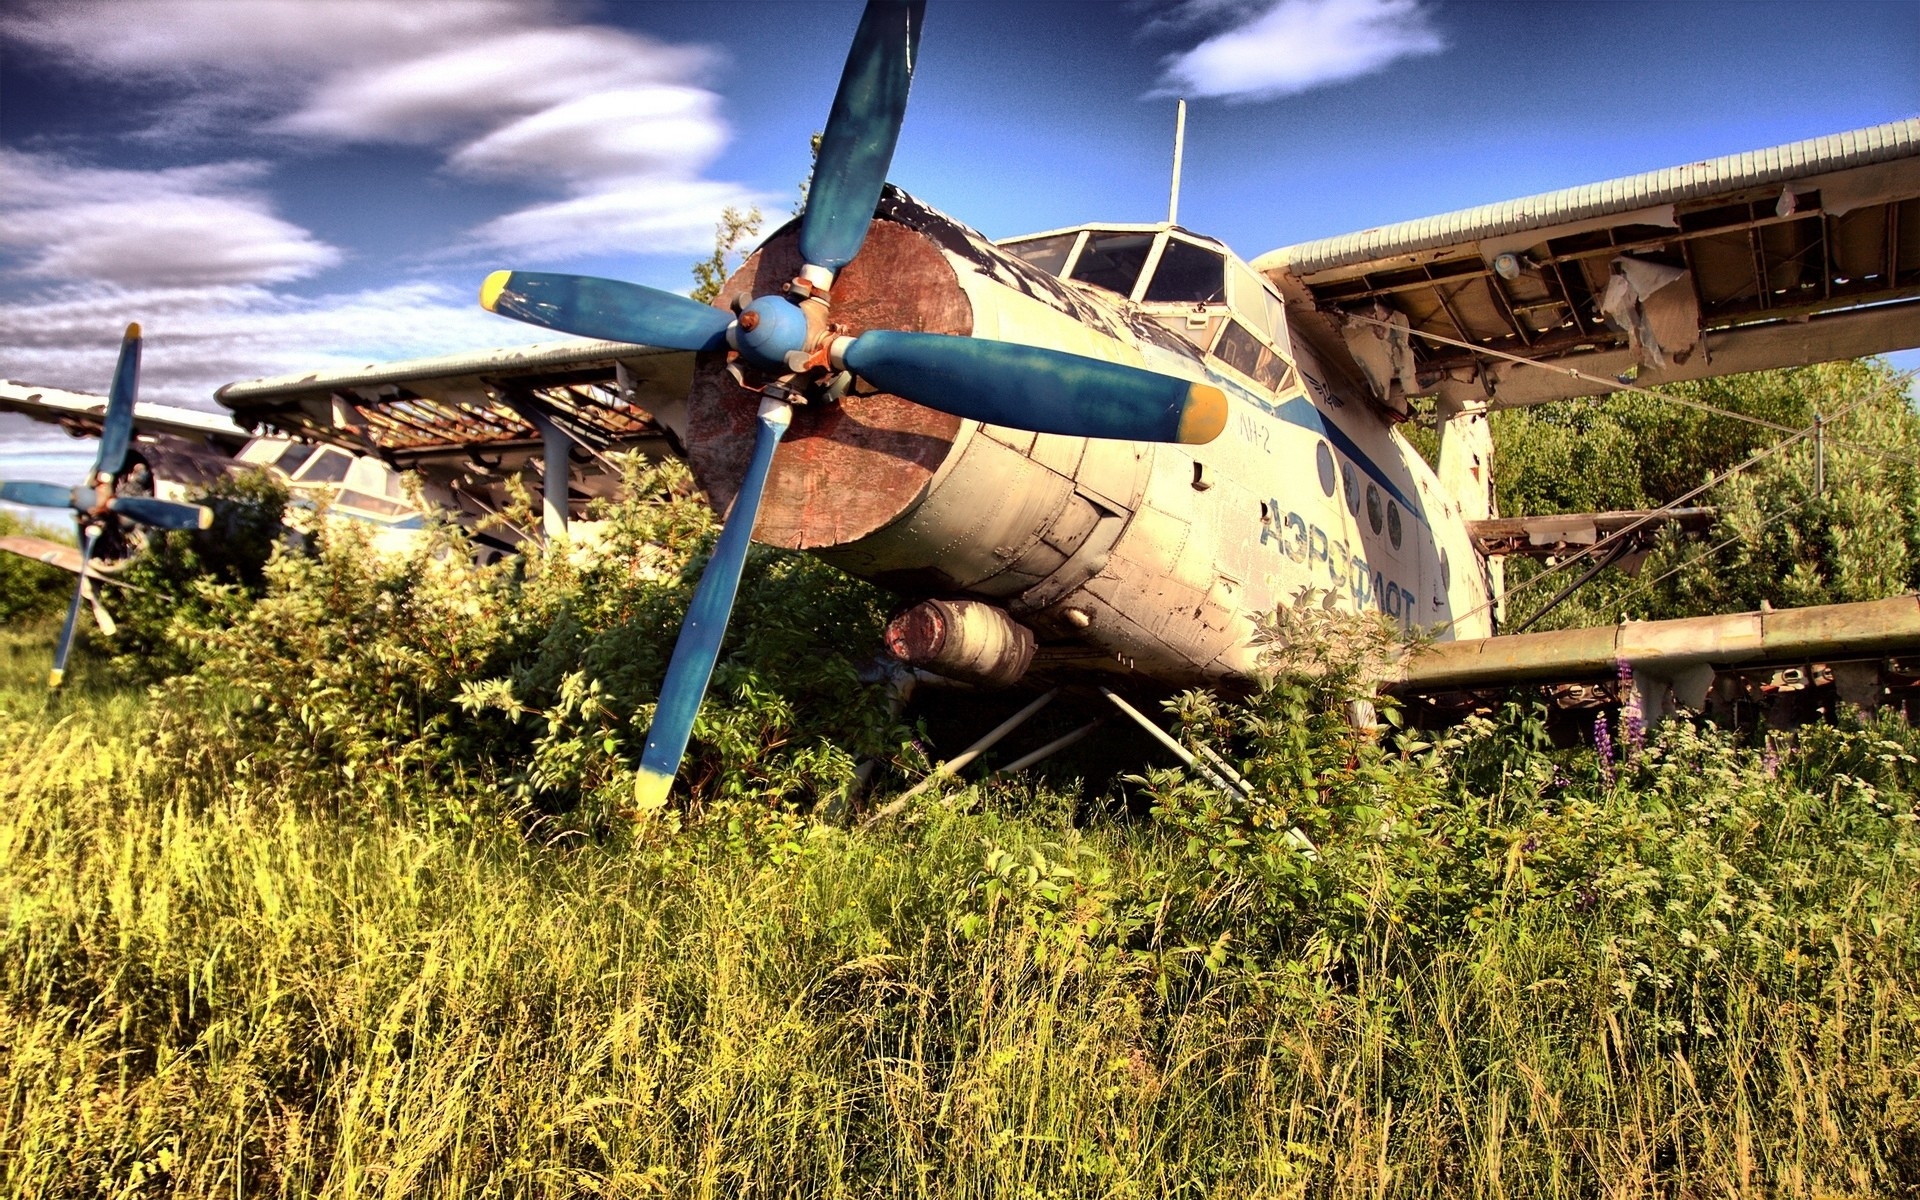 Vehicles Aircraft HD Wallpaper | Background Image